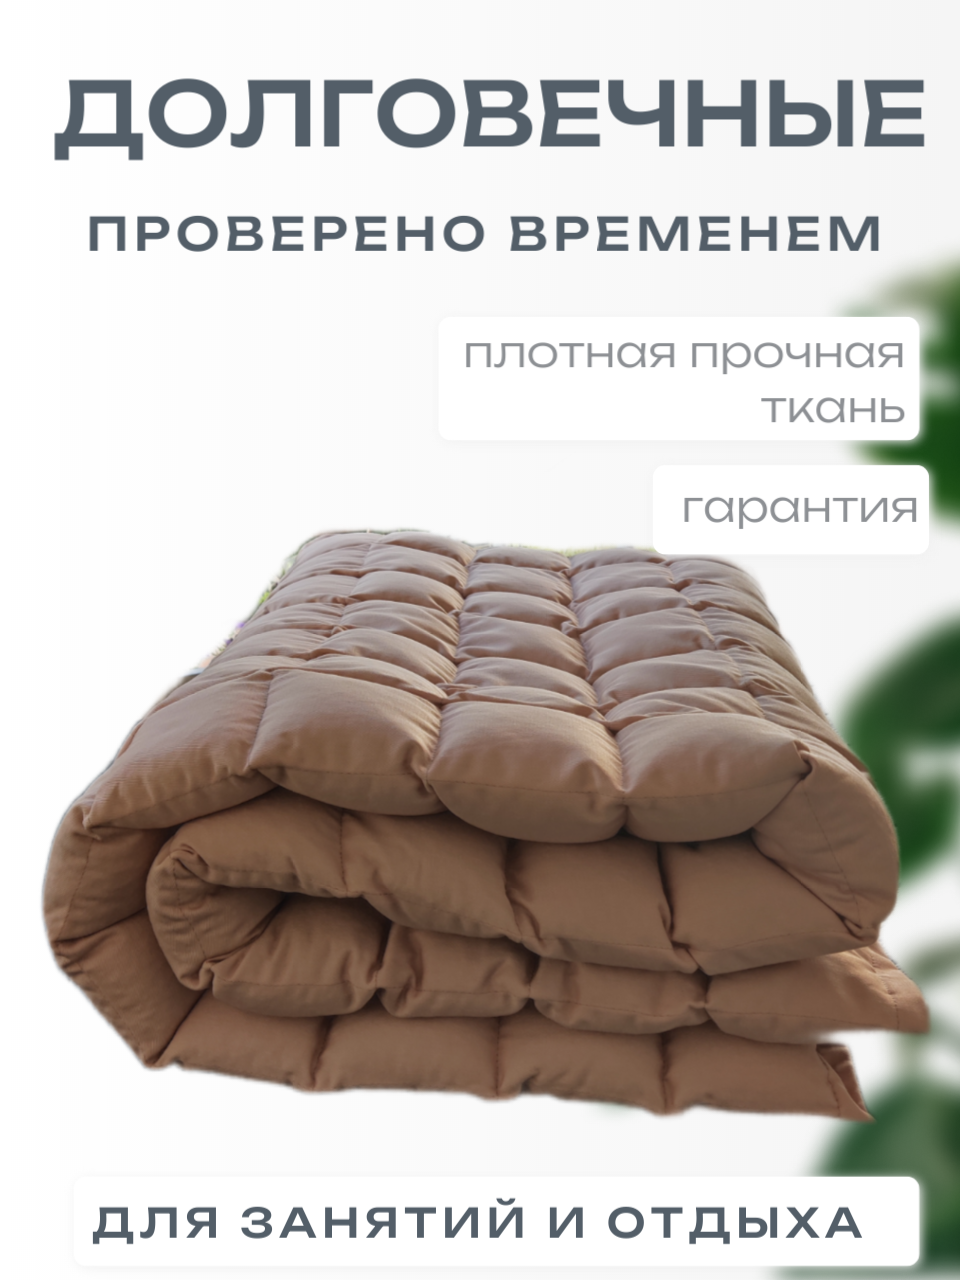 Утяжеленное одеяло (лузга) ОМТ-10.2 фото 5